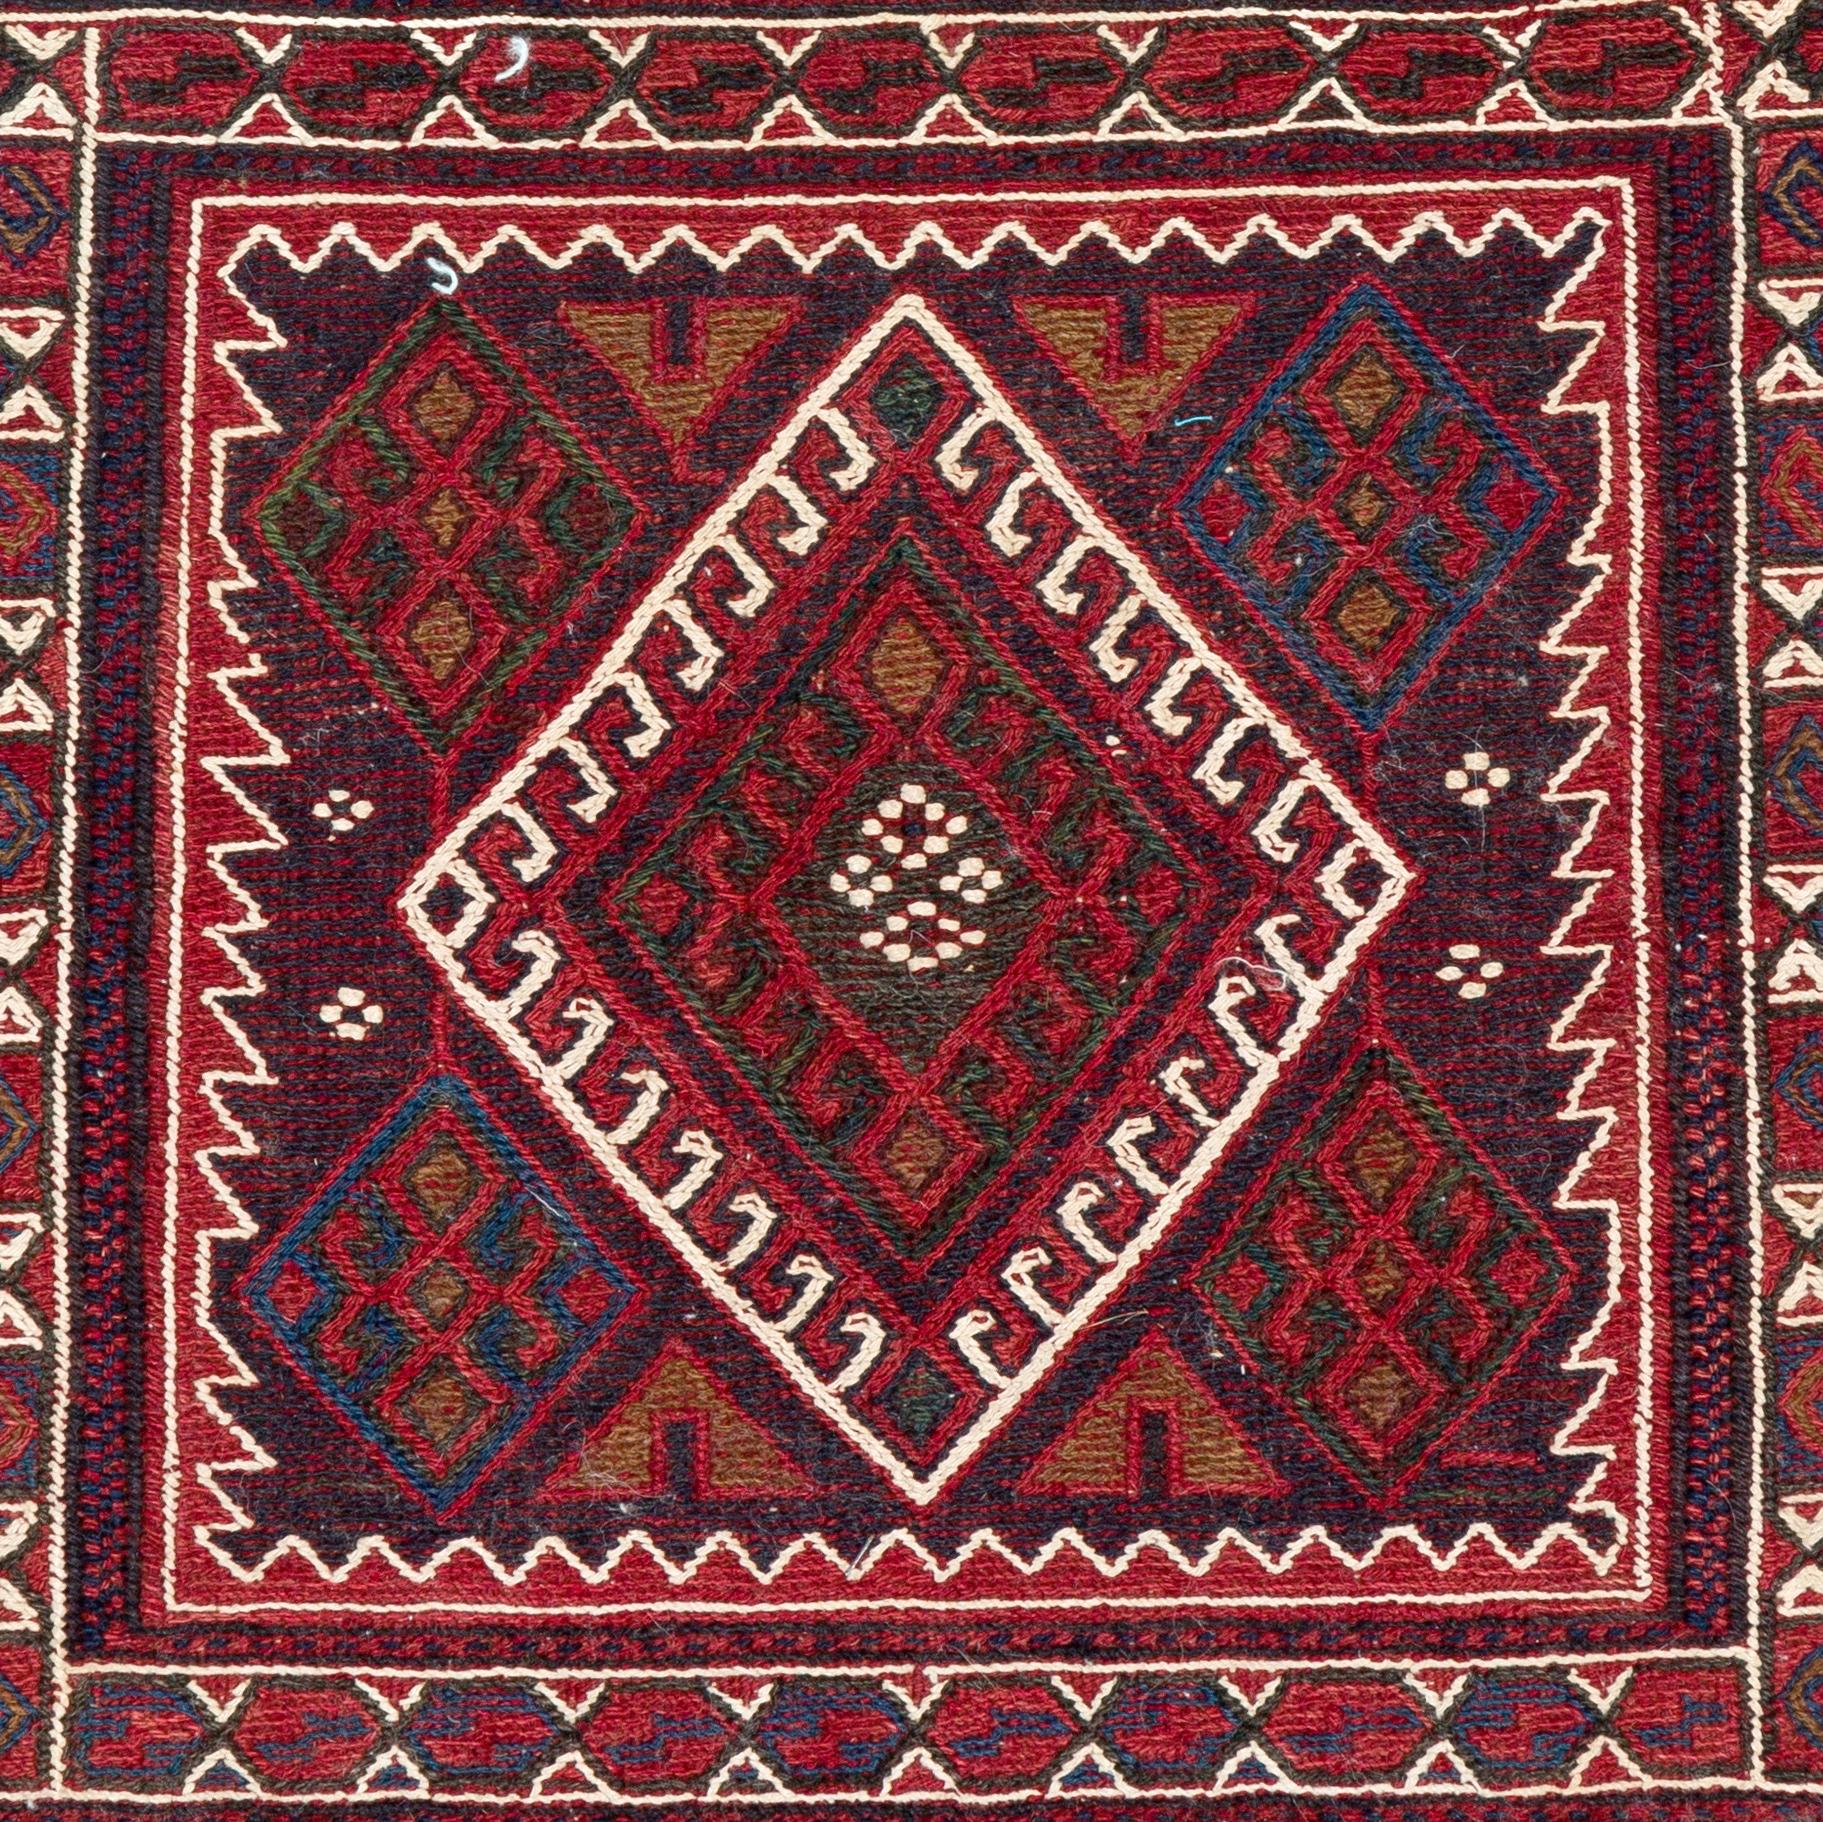 Tribal Rare Vintage Turkish Salt Bag, Decorative Handmade Wall Hanging in Red For Sale